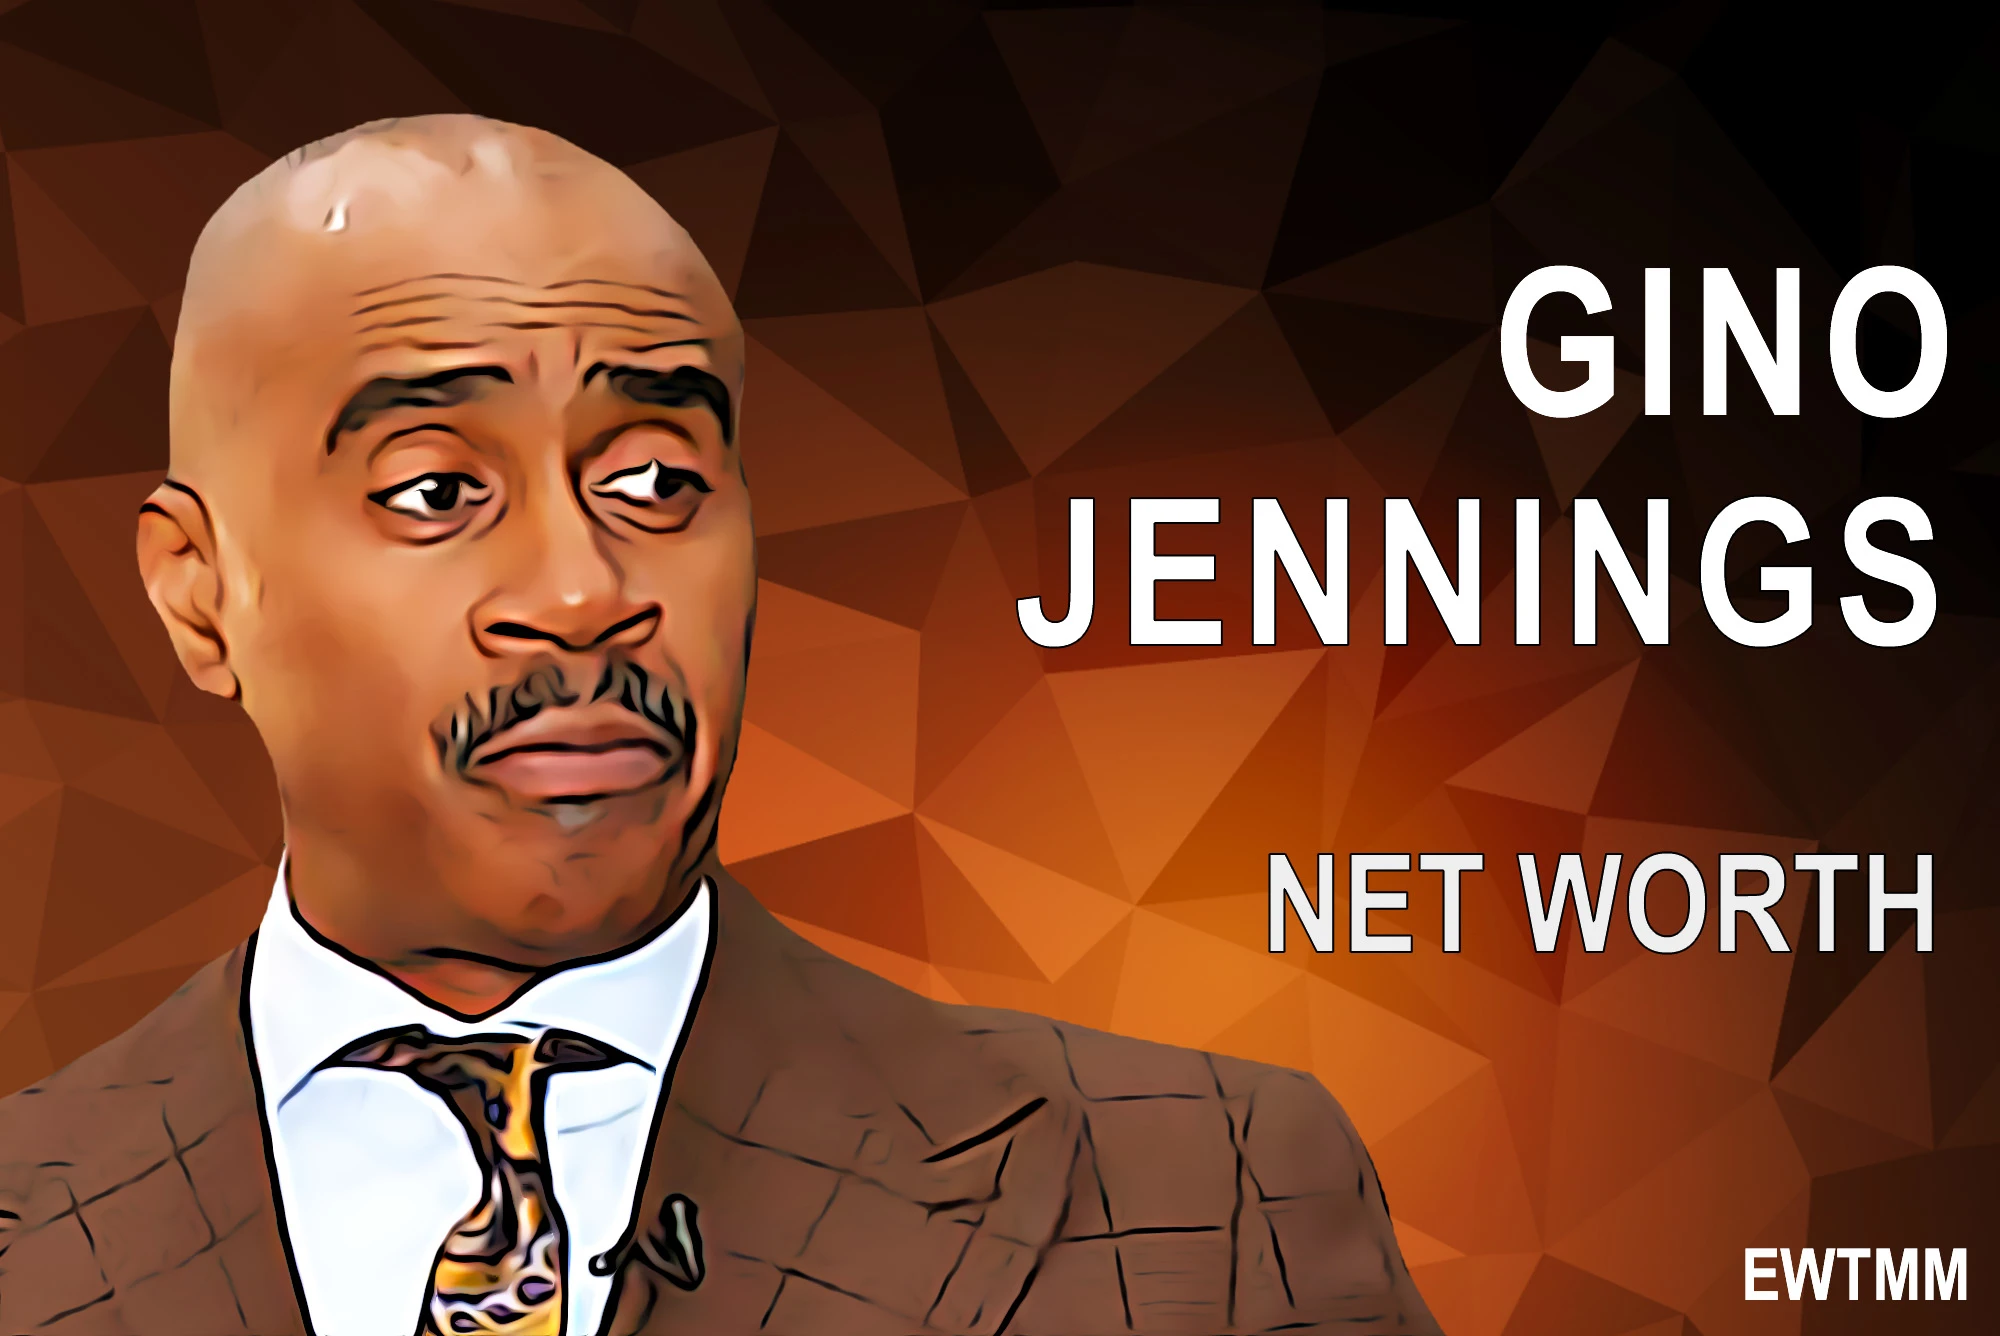 Gino Jennings Net Worth